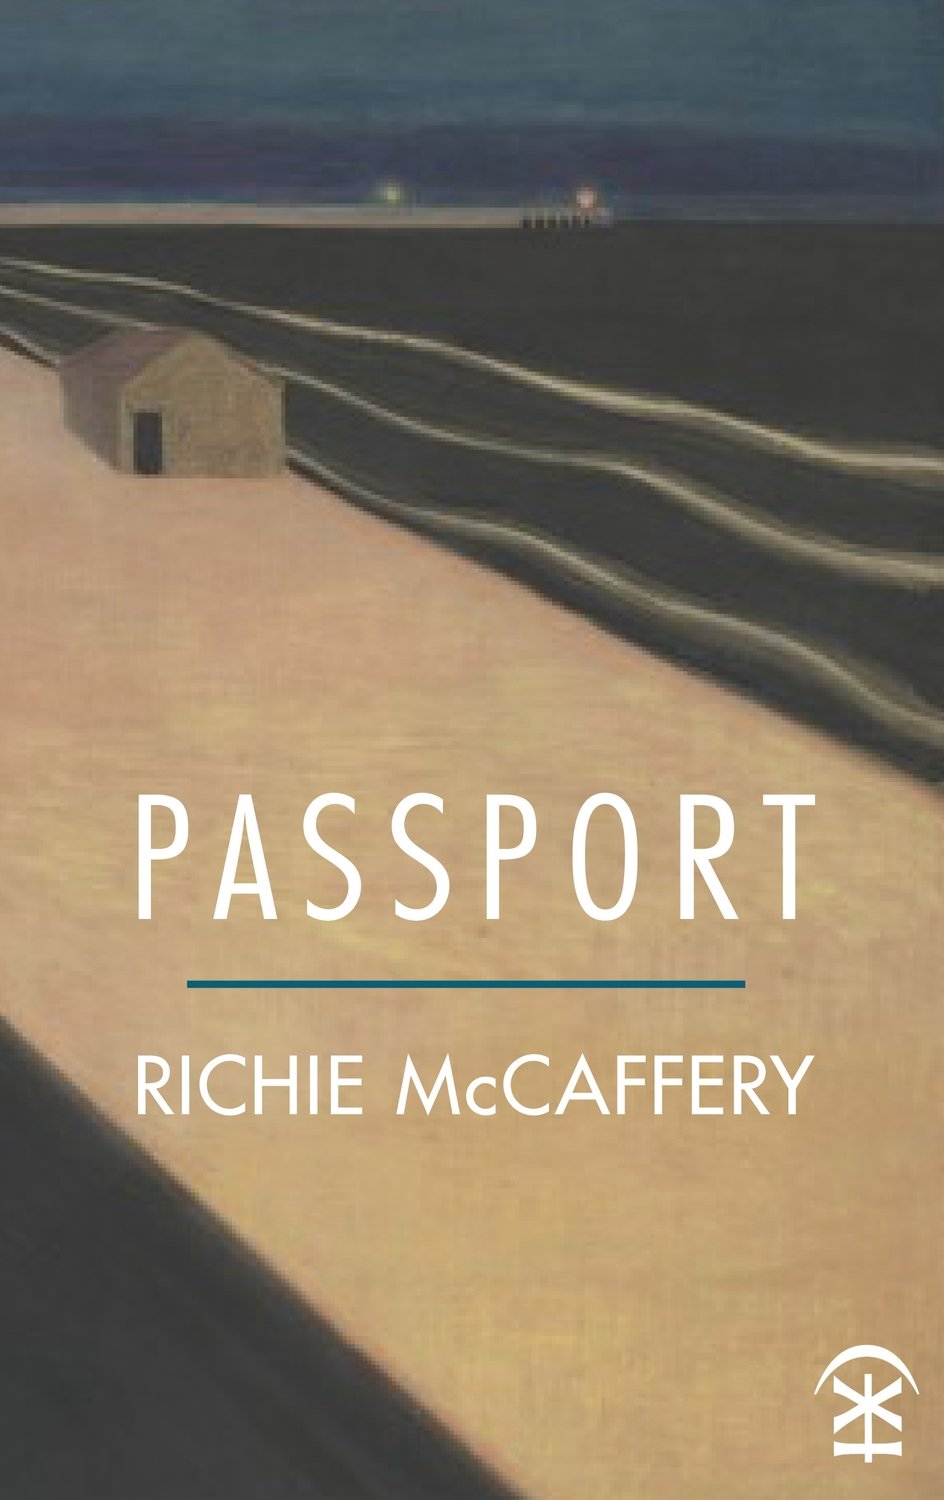 Passport - Richie McCaffery